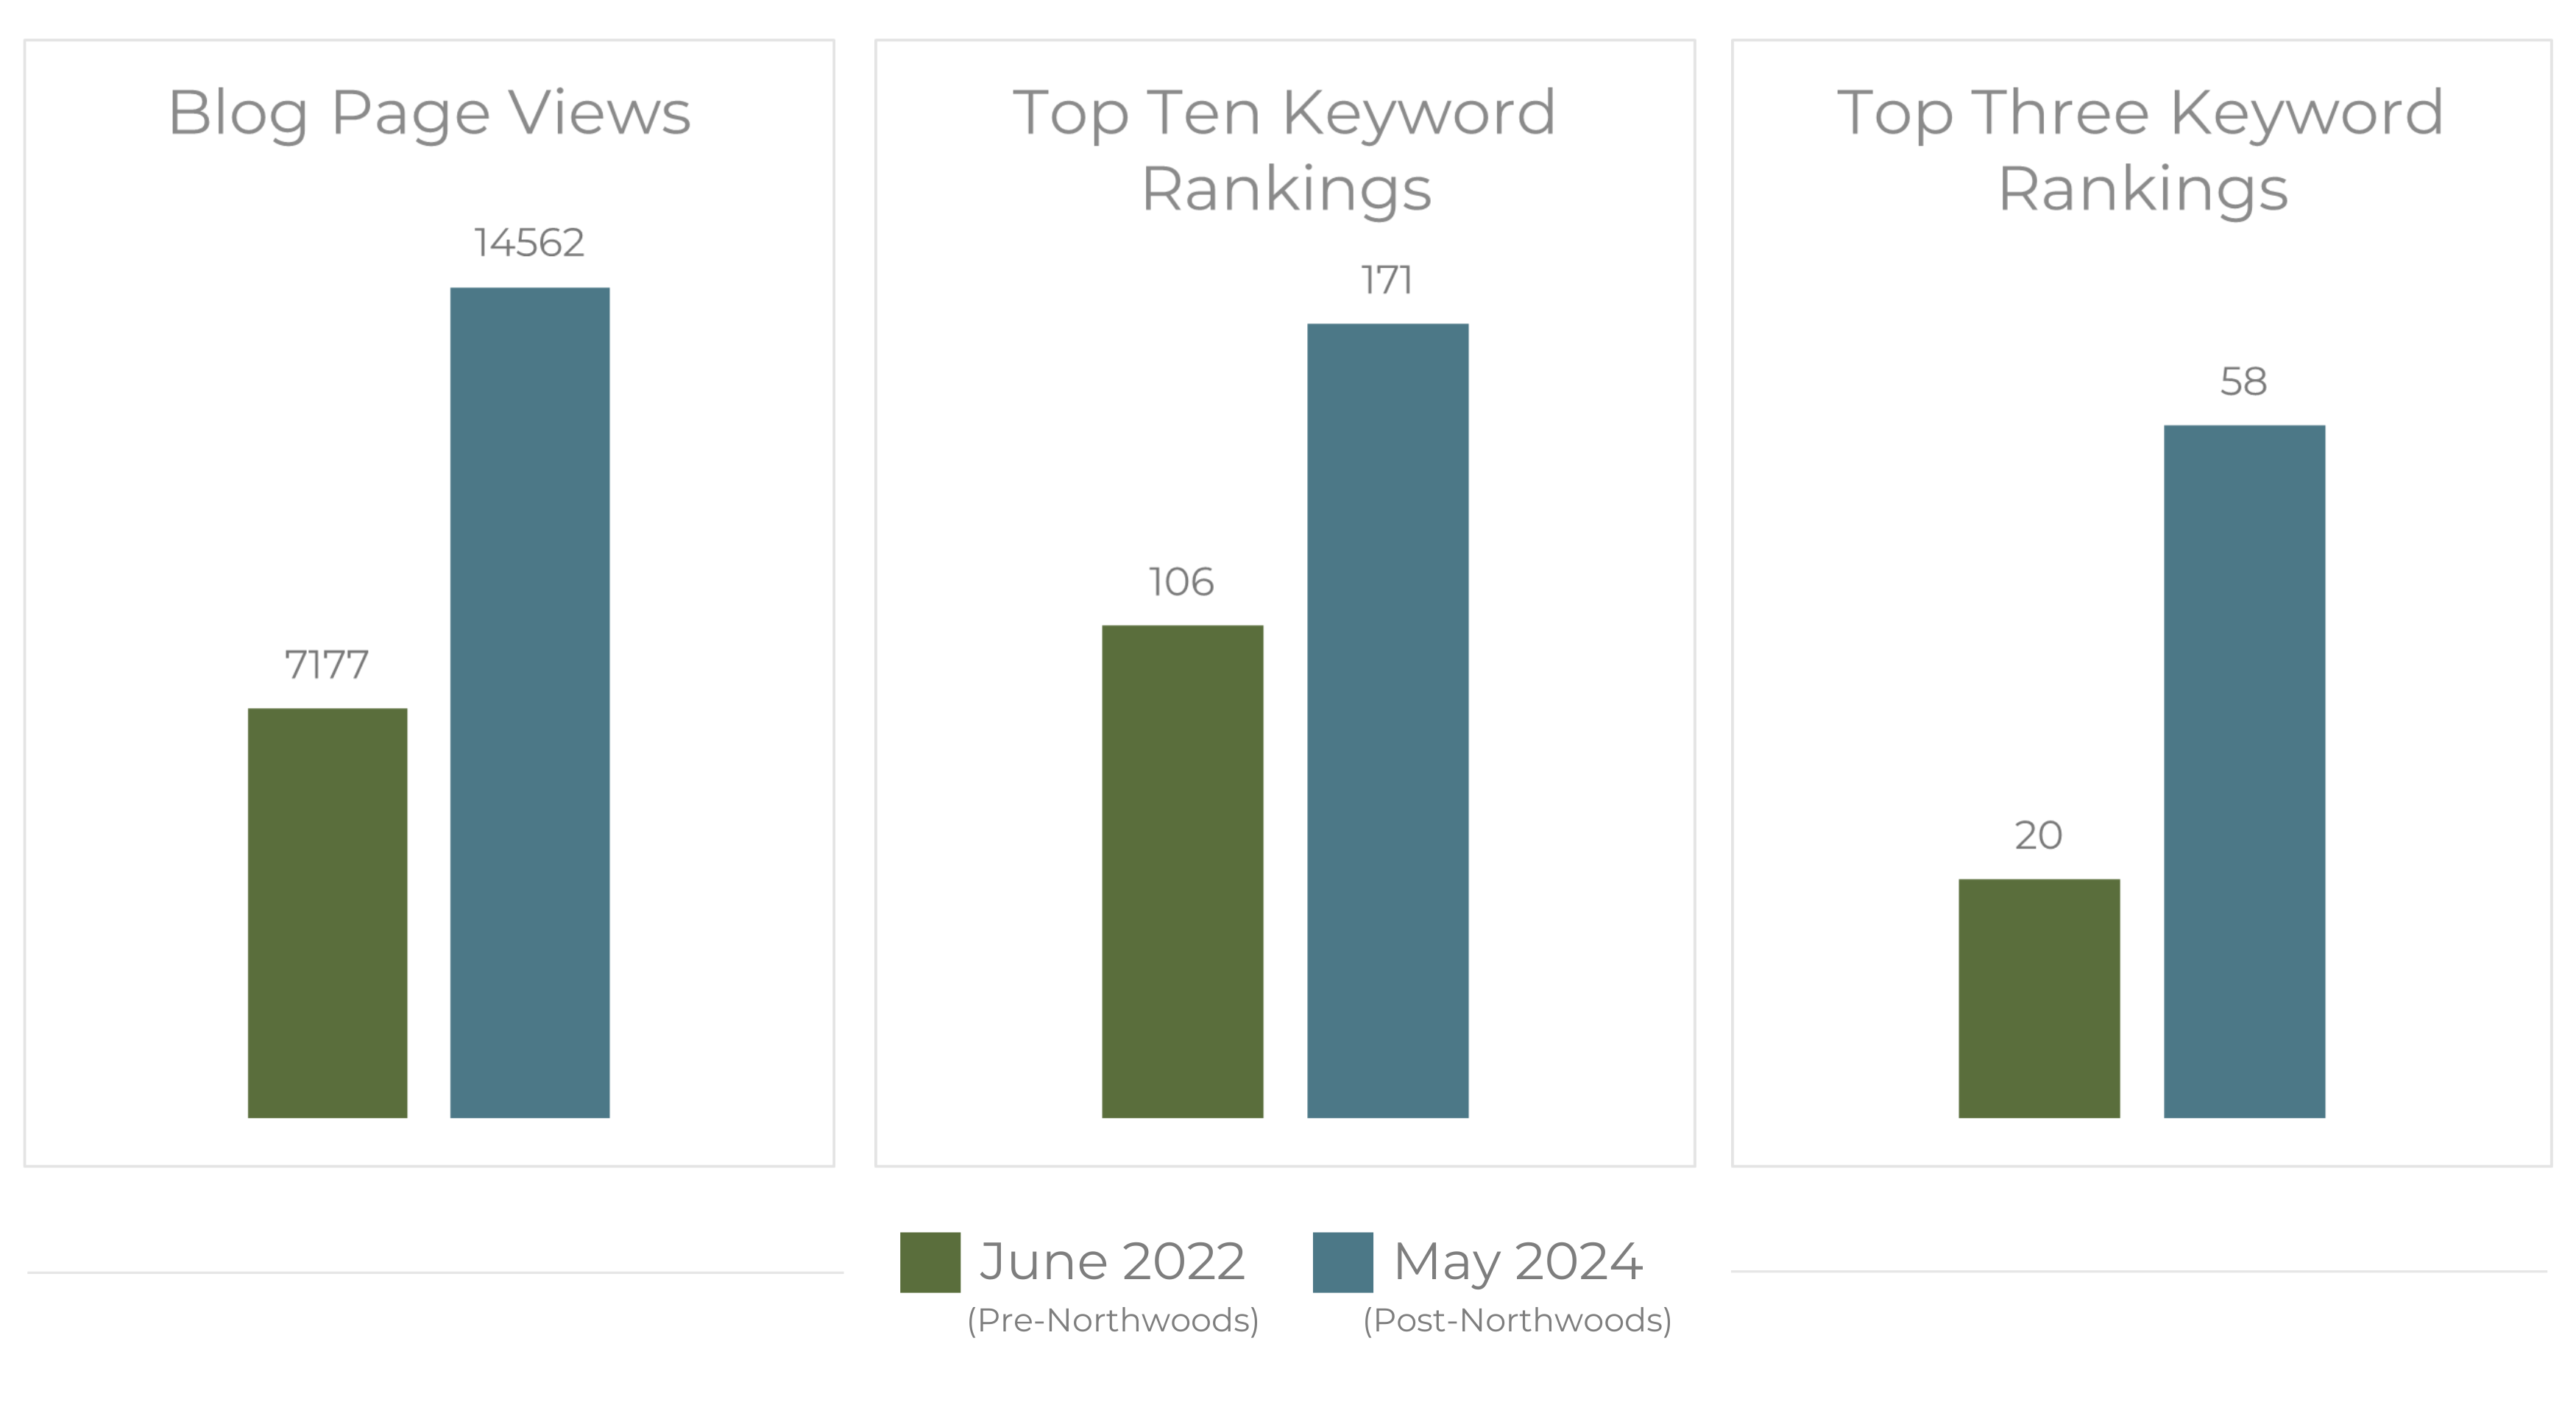 Bar chart showing increases in blog page views, top ten keyword rankings, and top ten keyword rankings comparing June 2022 and May 2024